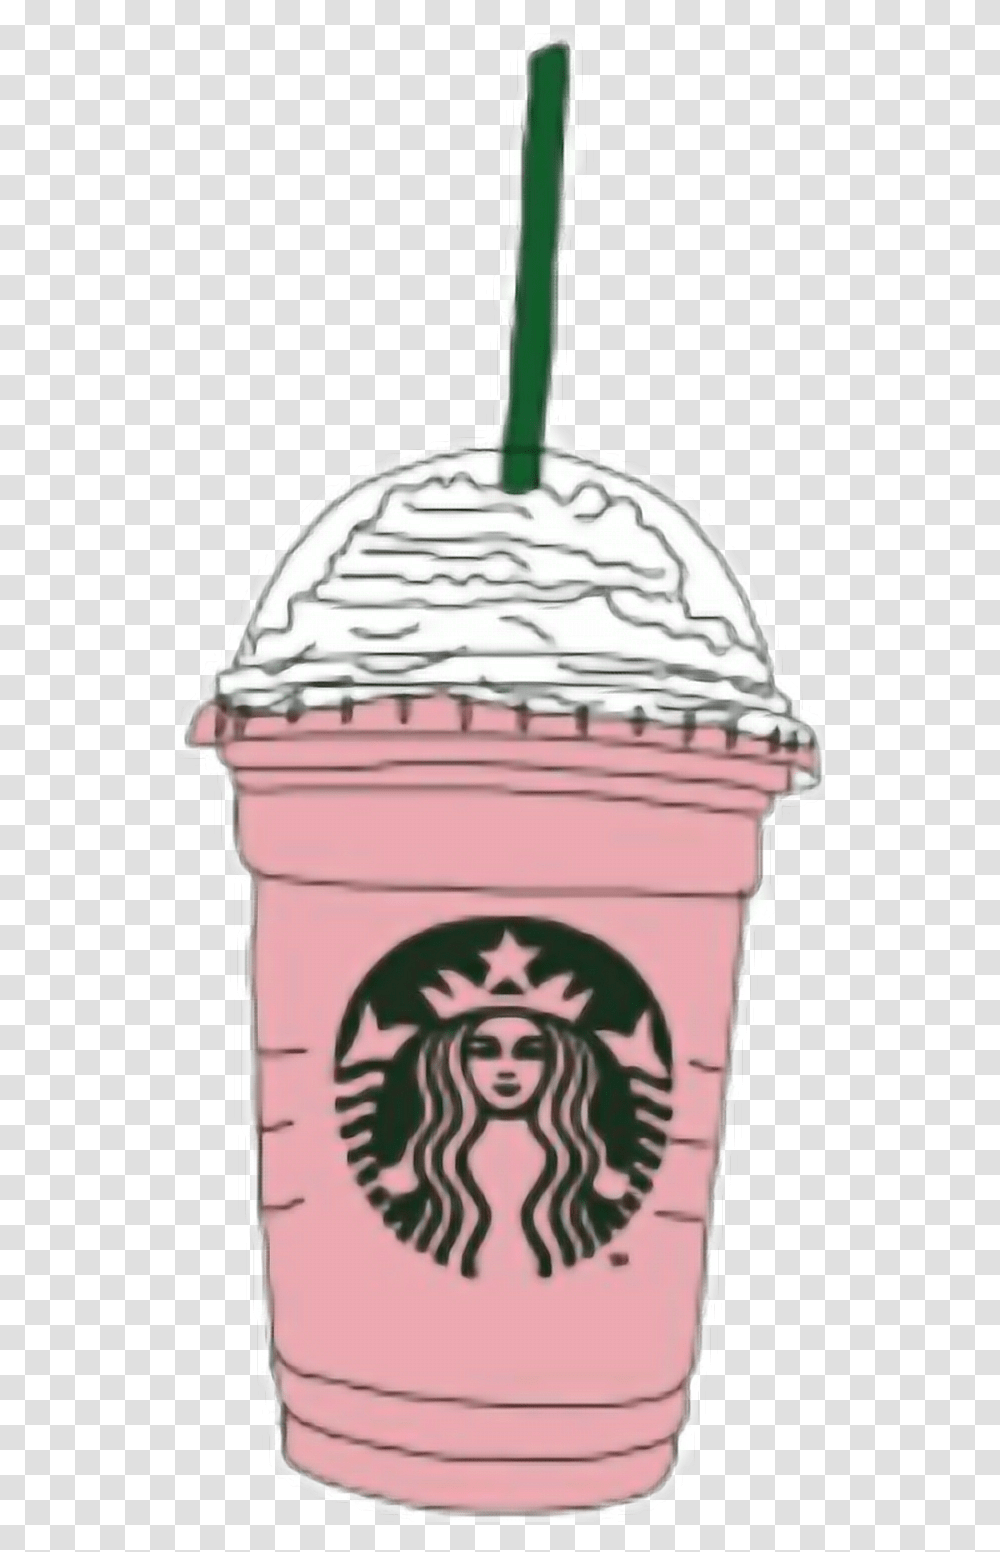 Starbucks Love Tumblr Pink Cute Starbucks New Logo 2011, Cream, Dessert, Food, Creme Transparent Png